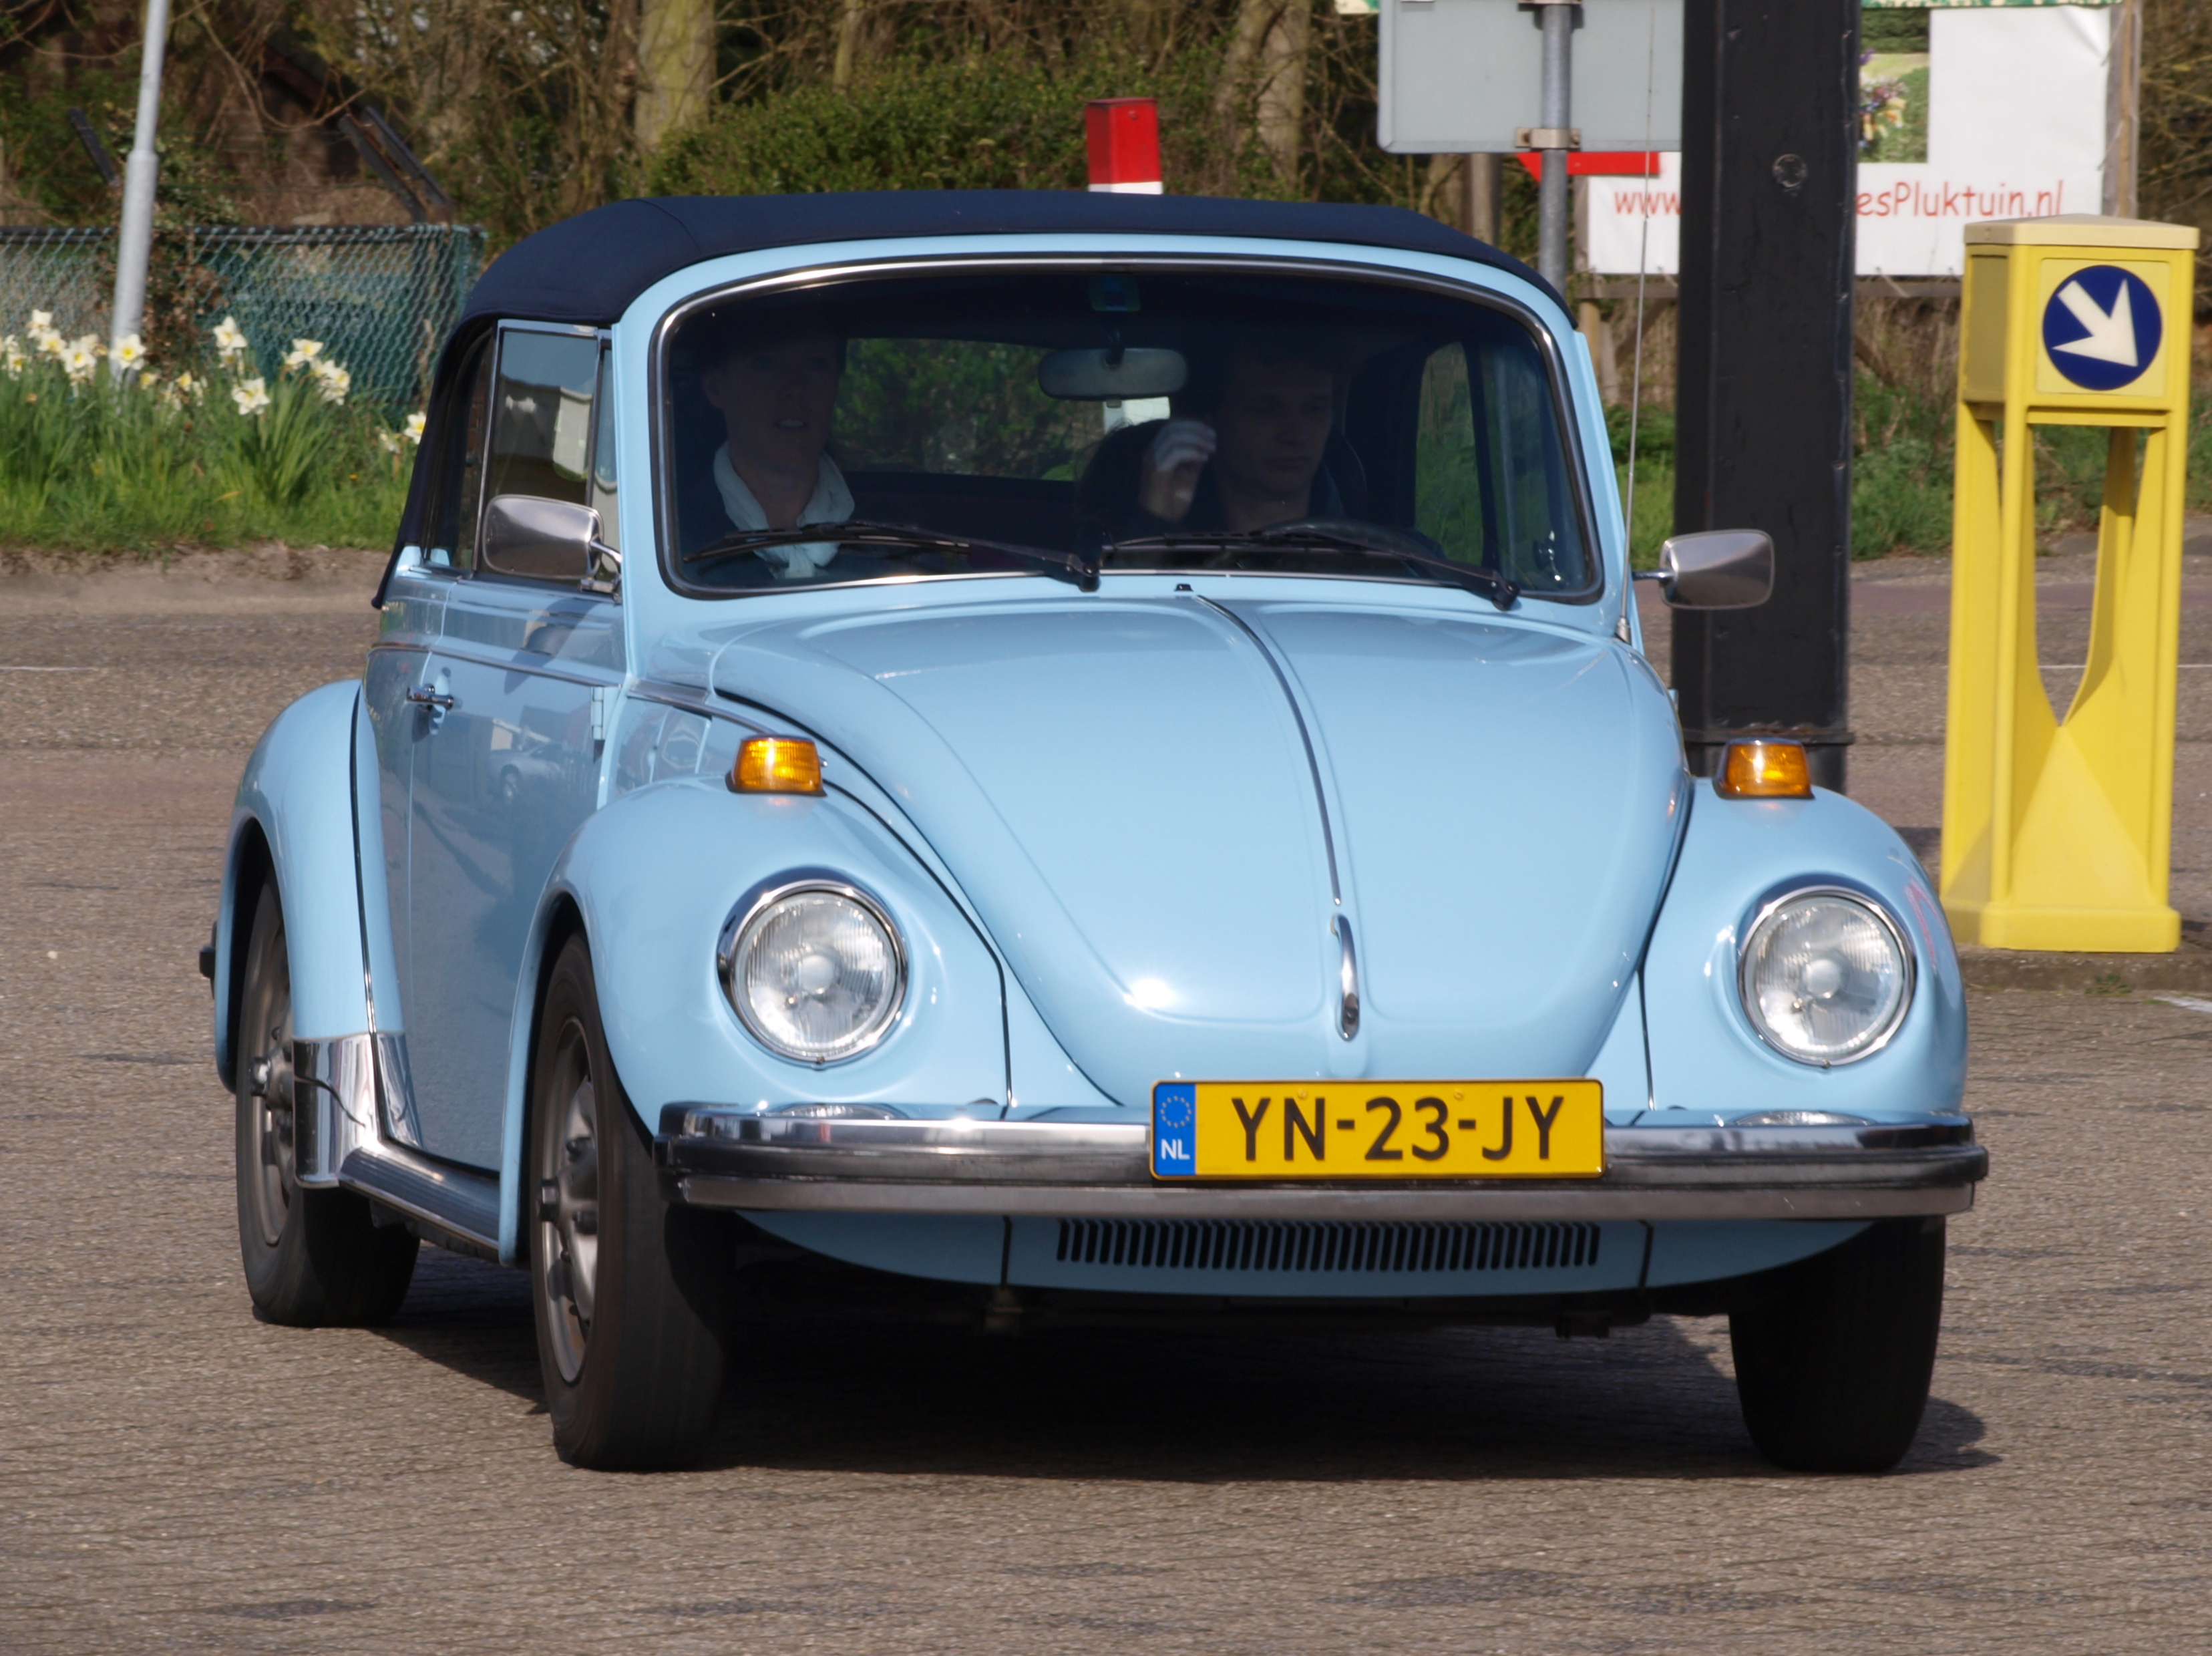 File:Volkswagen 1303 cabriolet, Dutch registration YN-23-JY.JPG